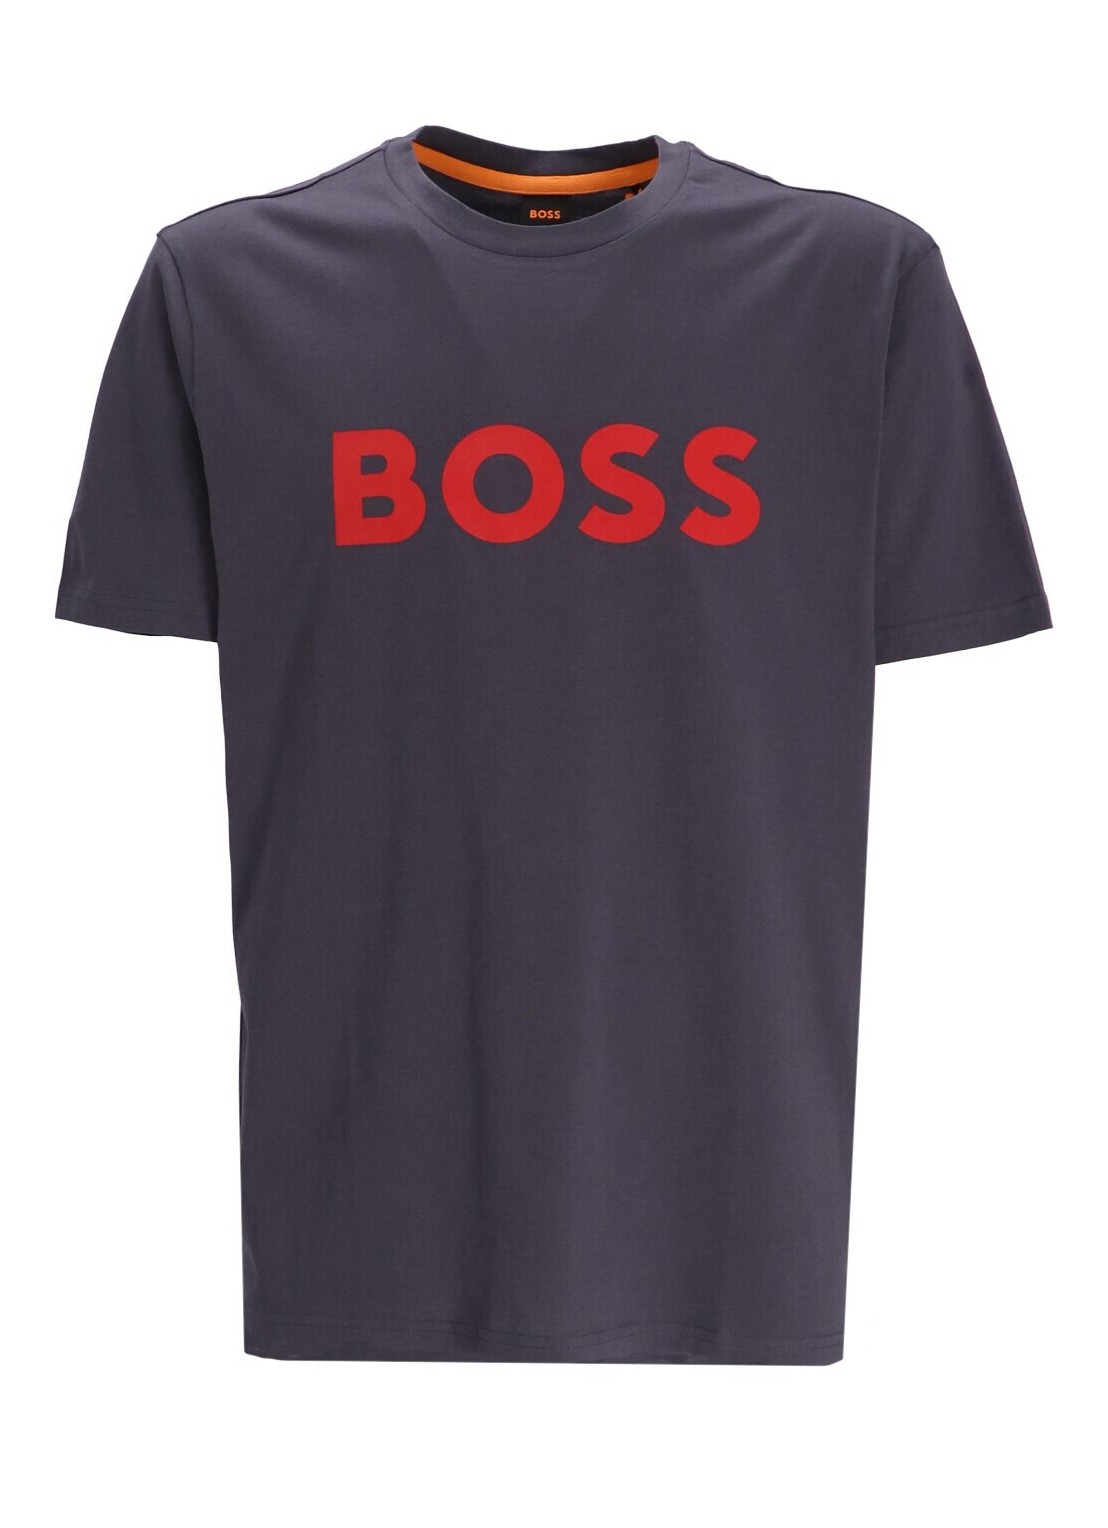 Camiseta boss t-shirt man thinking 1 50481923 022 talla gris
 